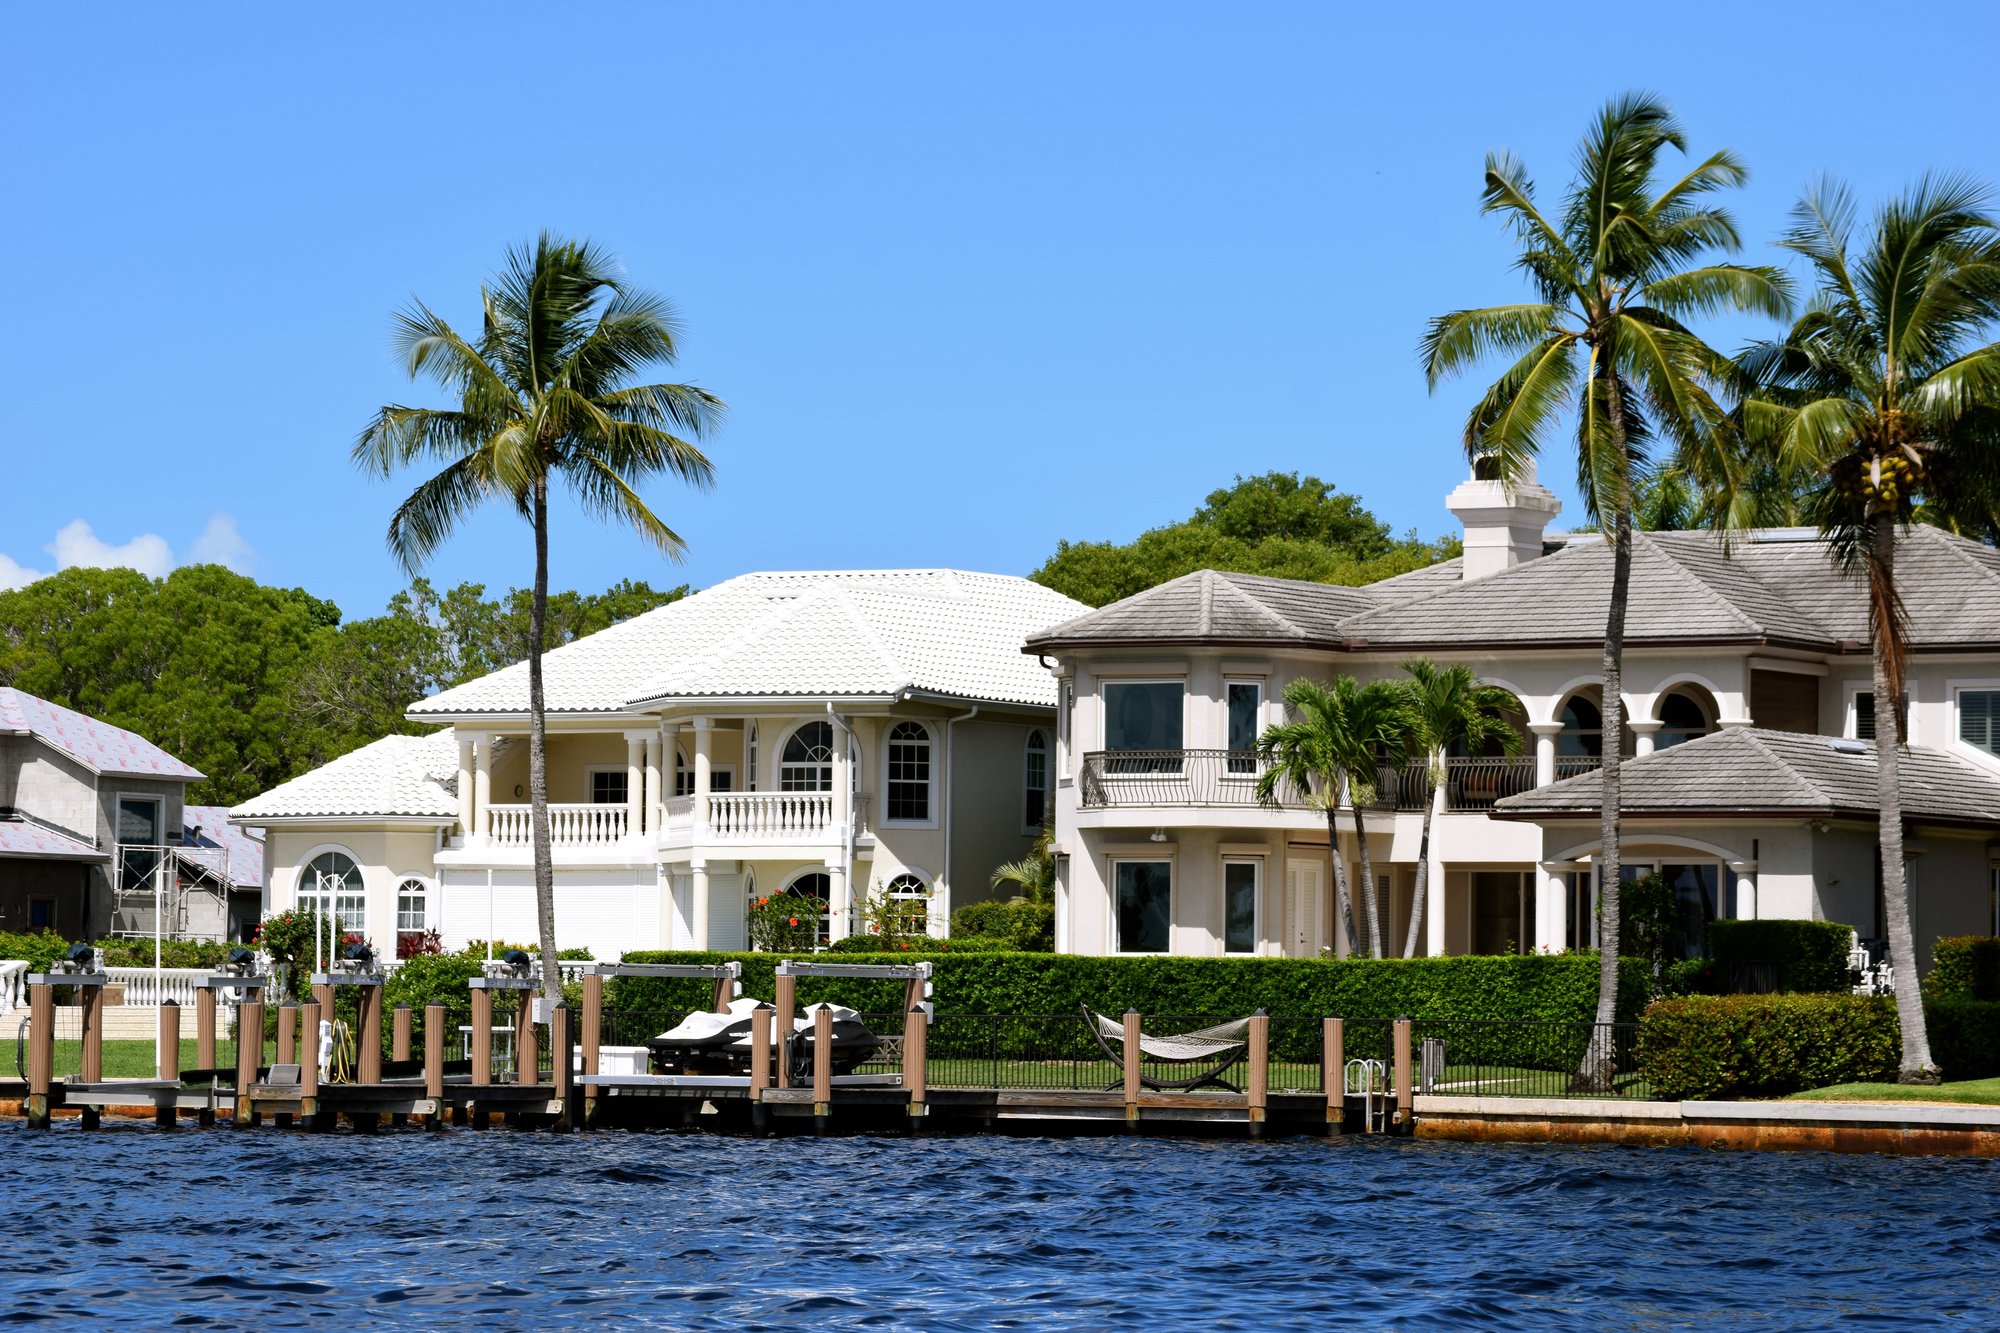 Port Royal Homes for sale in Naples Florida